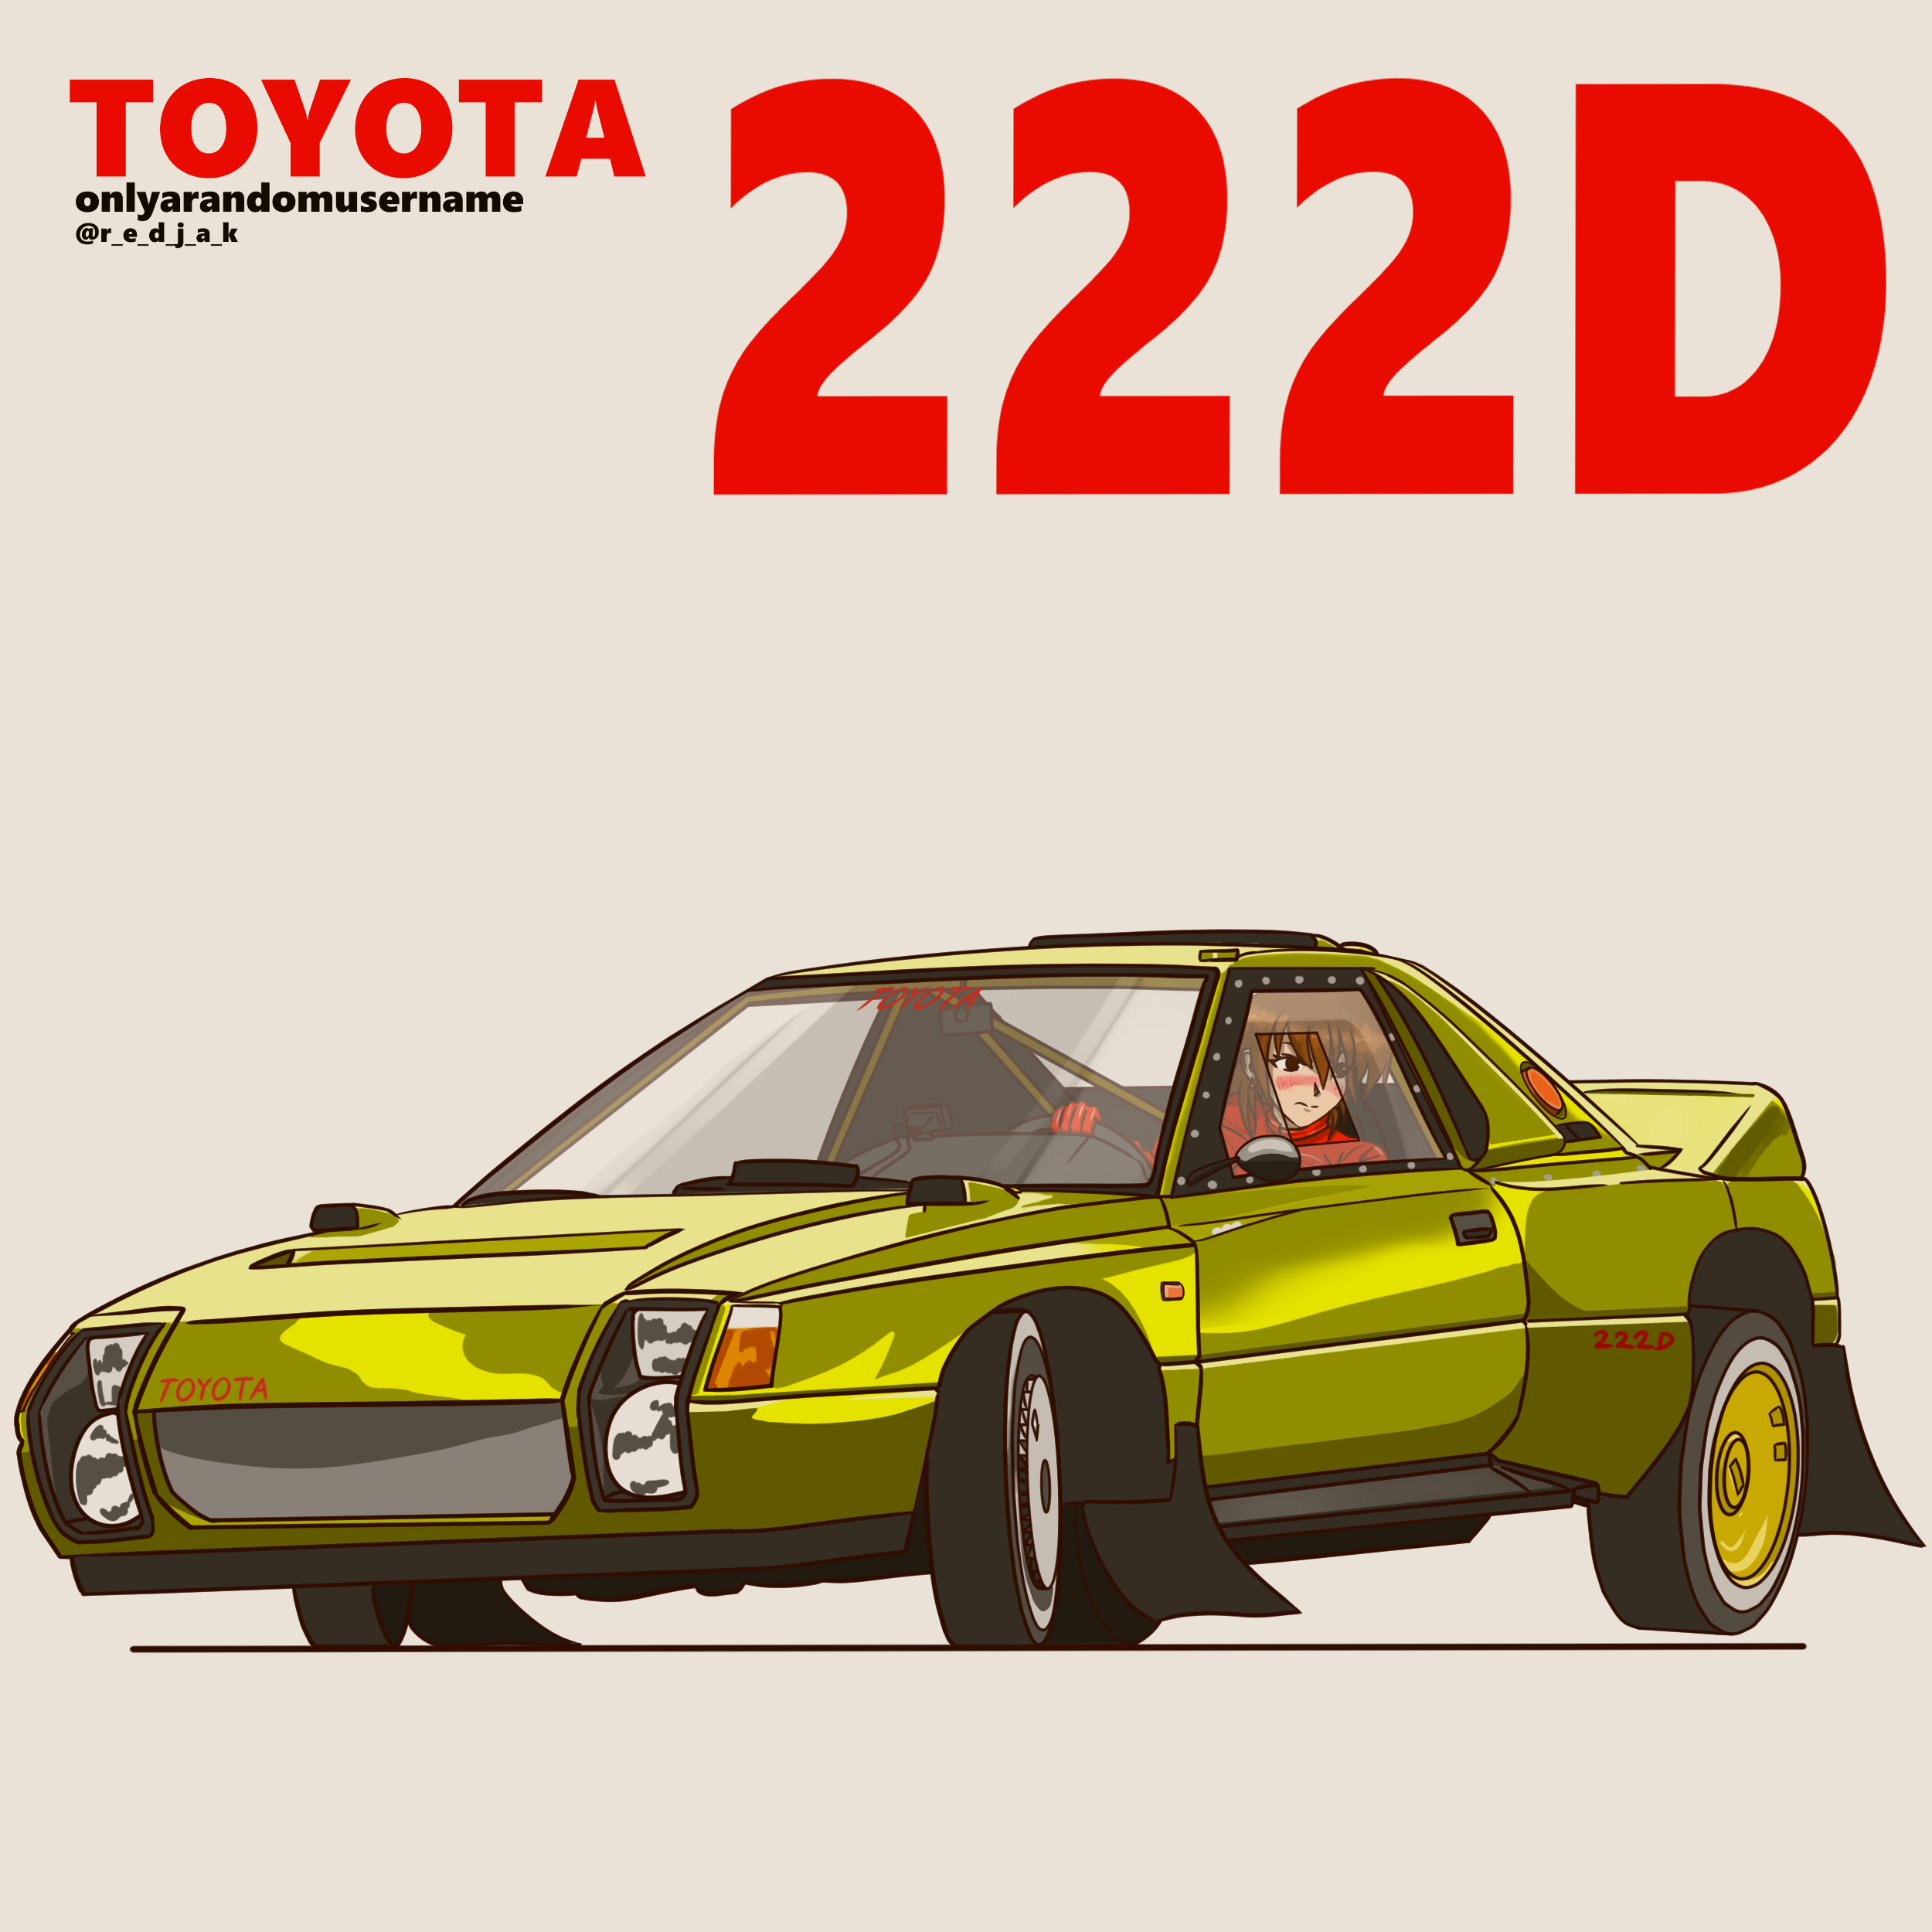 Onlyarandomusername Anime Girls Toyota Toyota 222D Rally Cars 2500x2500